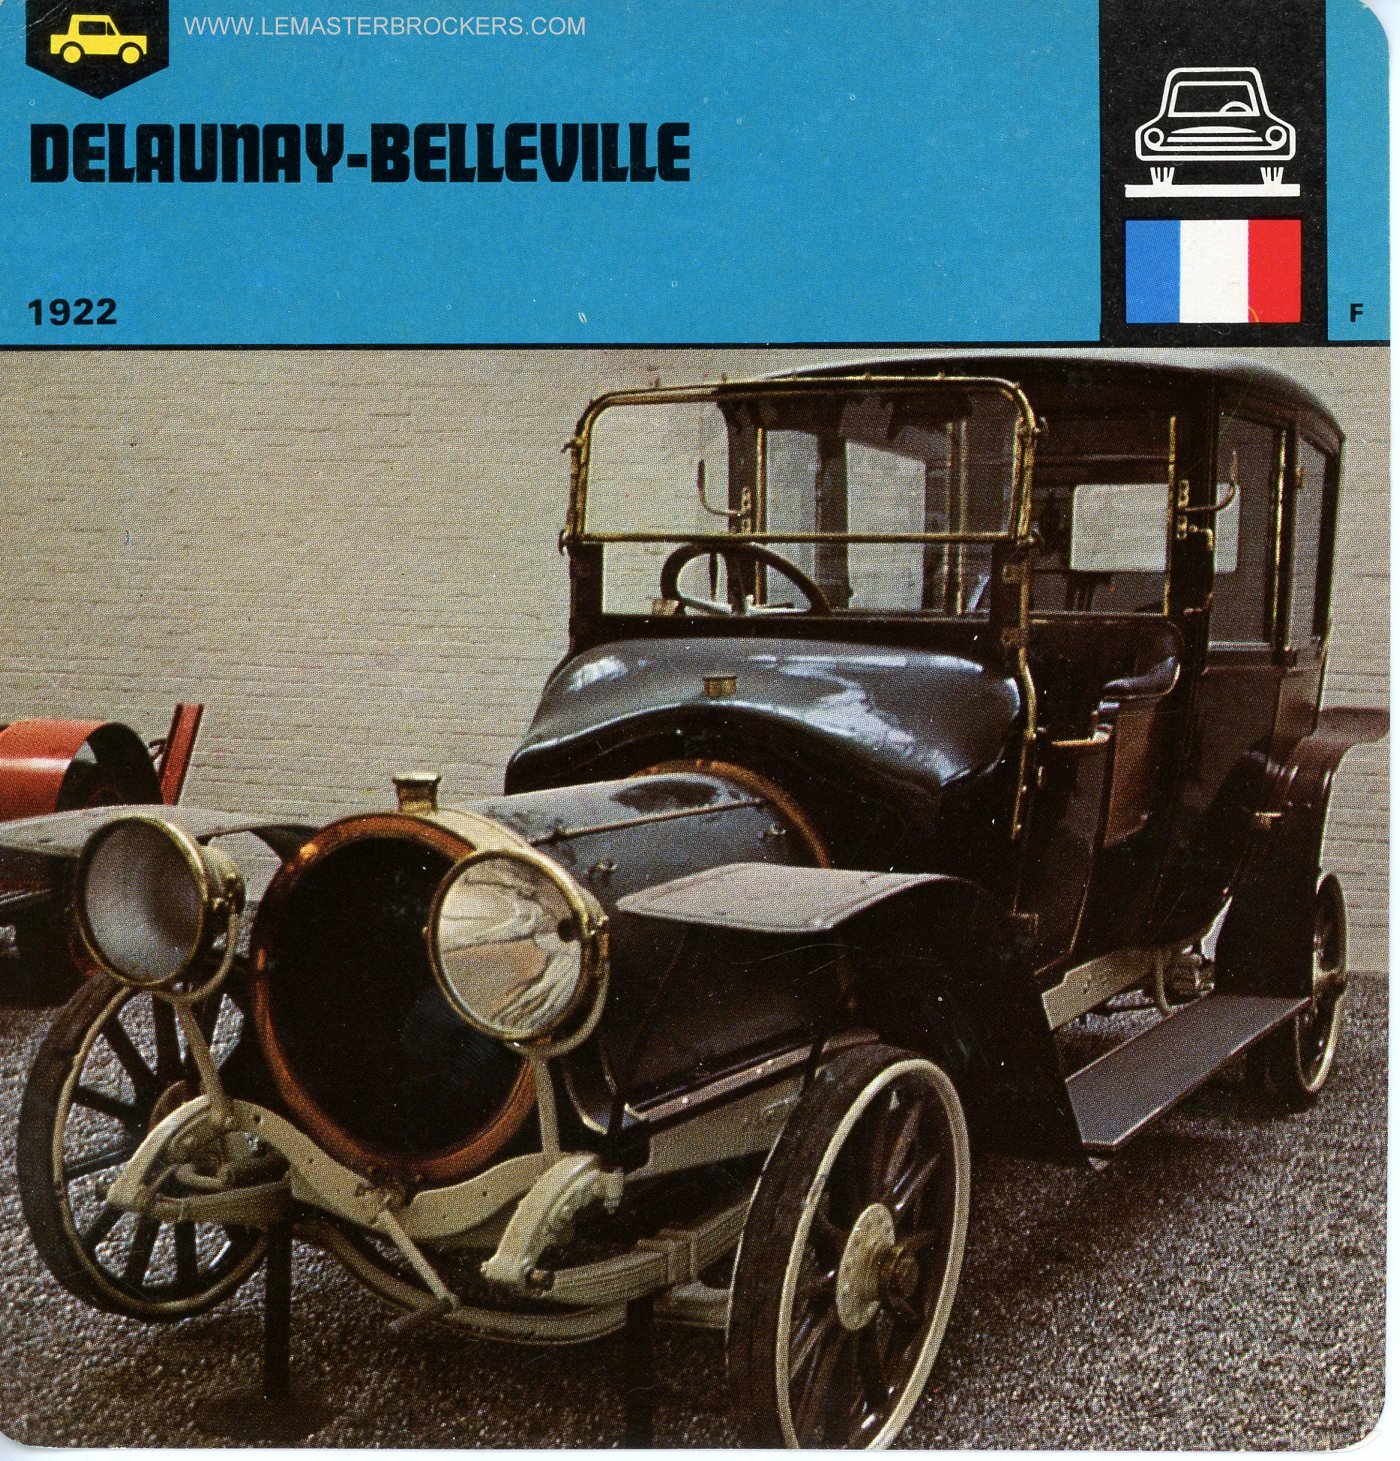 FICHE AUTO DEMAUNAY BELLEVILLE 1922-CARS-CARD